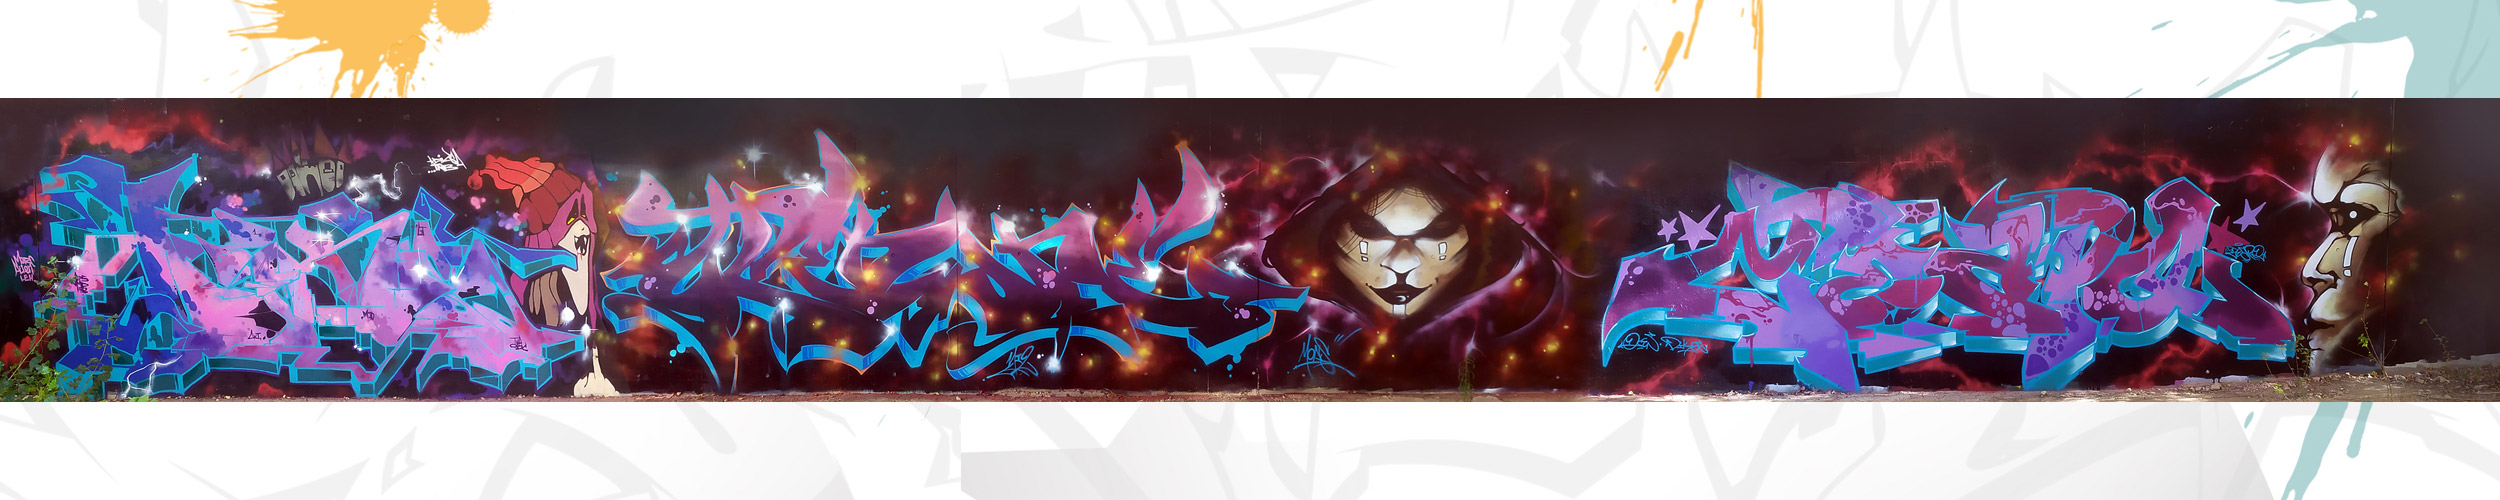 graffiti-diksa-ocen-guest